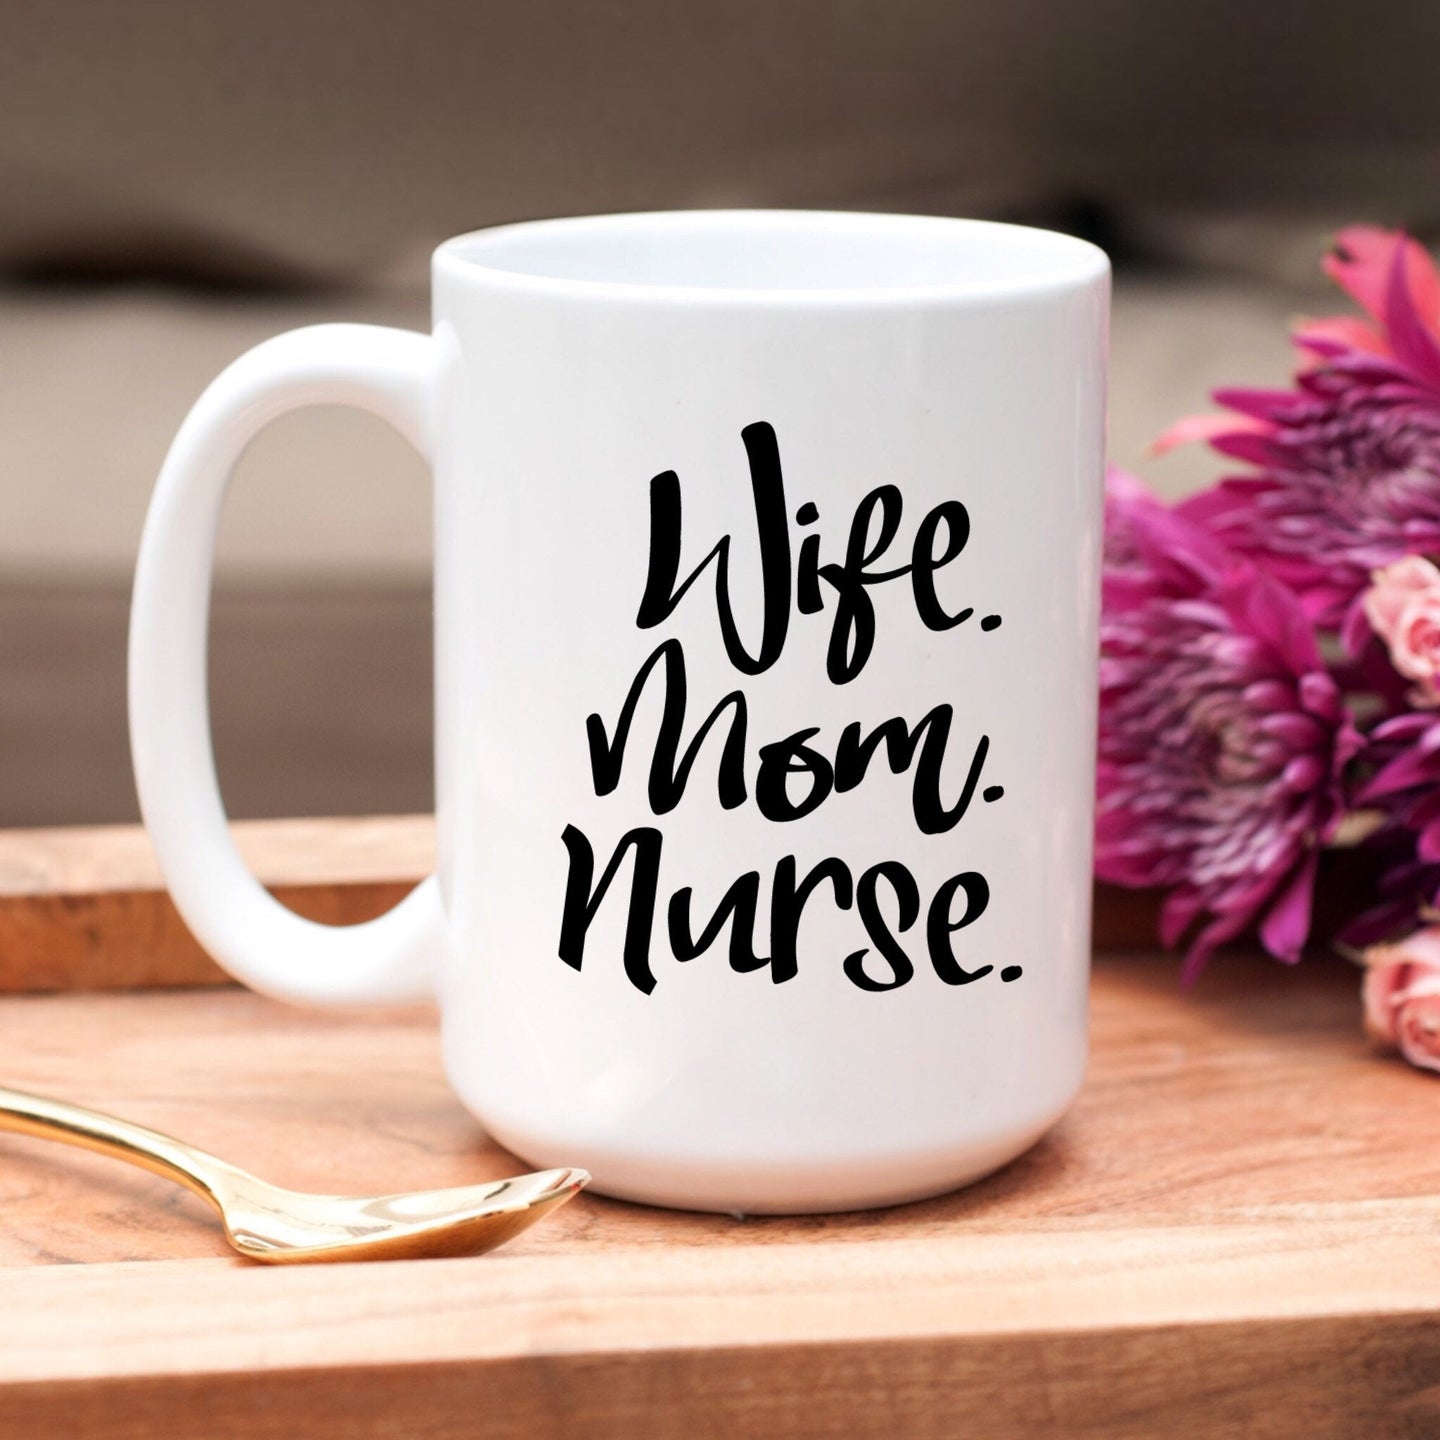 Wife. Mom. Nurse.